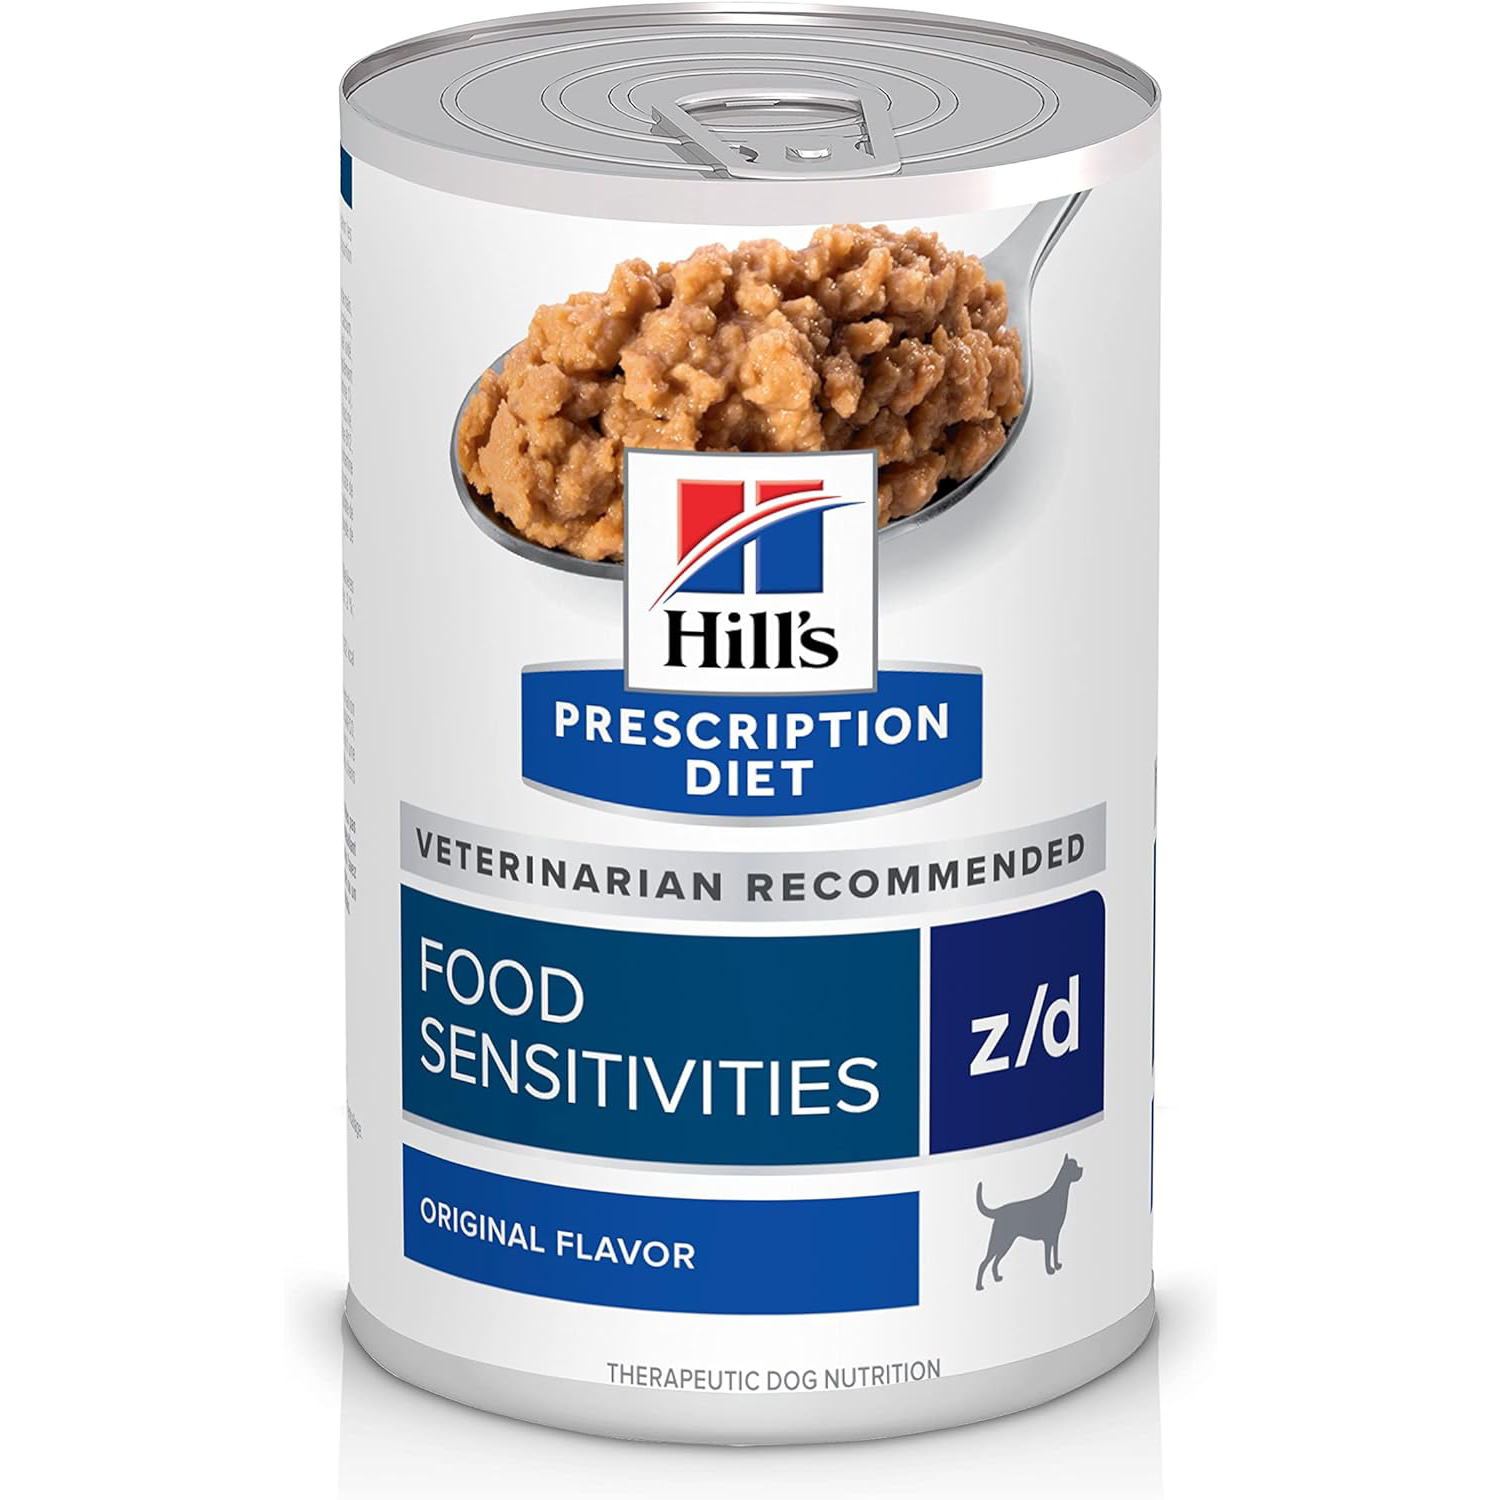 Hill’s z_d for Food Sensitivities